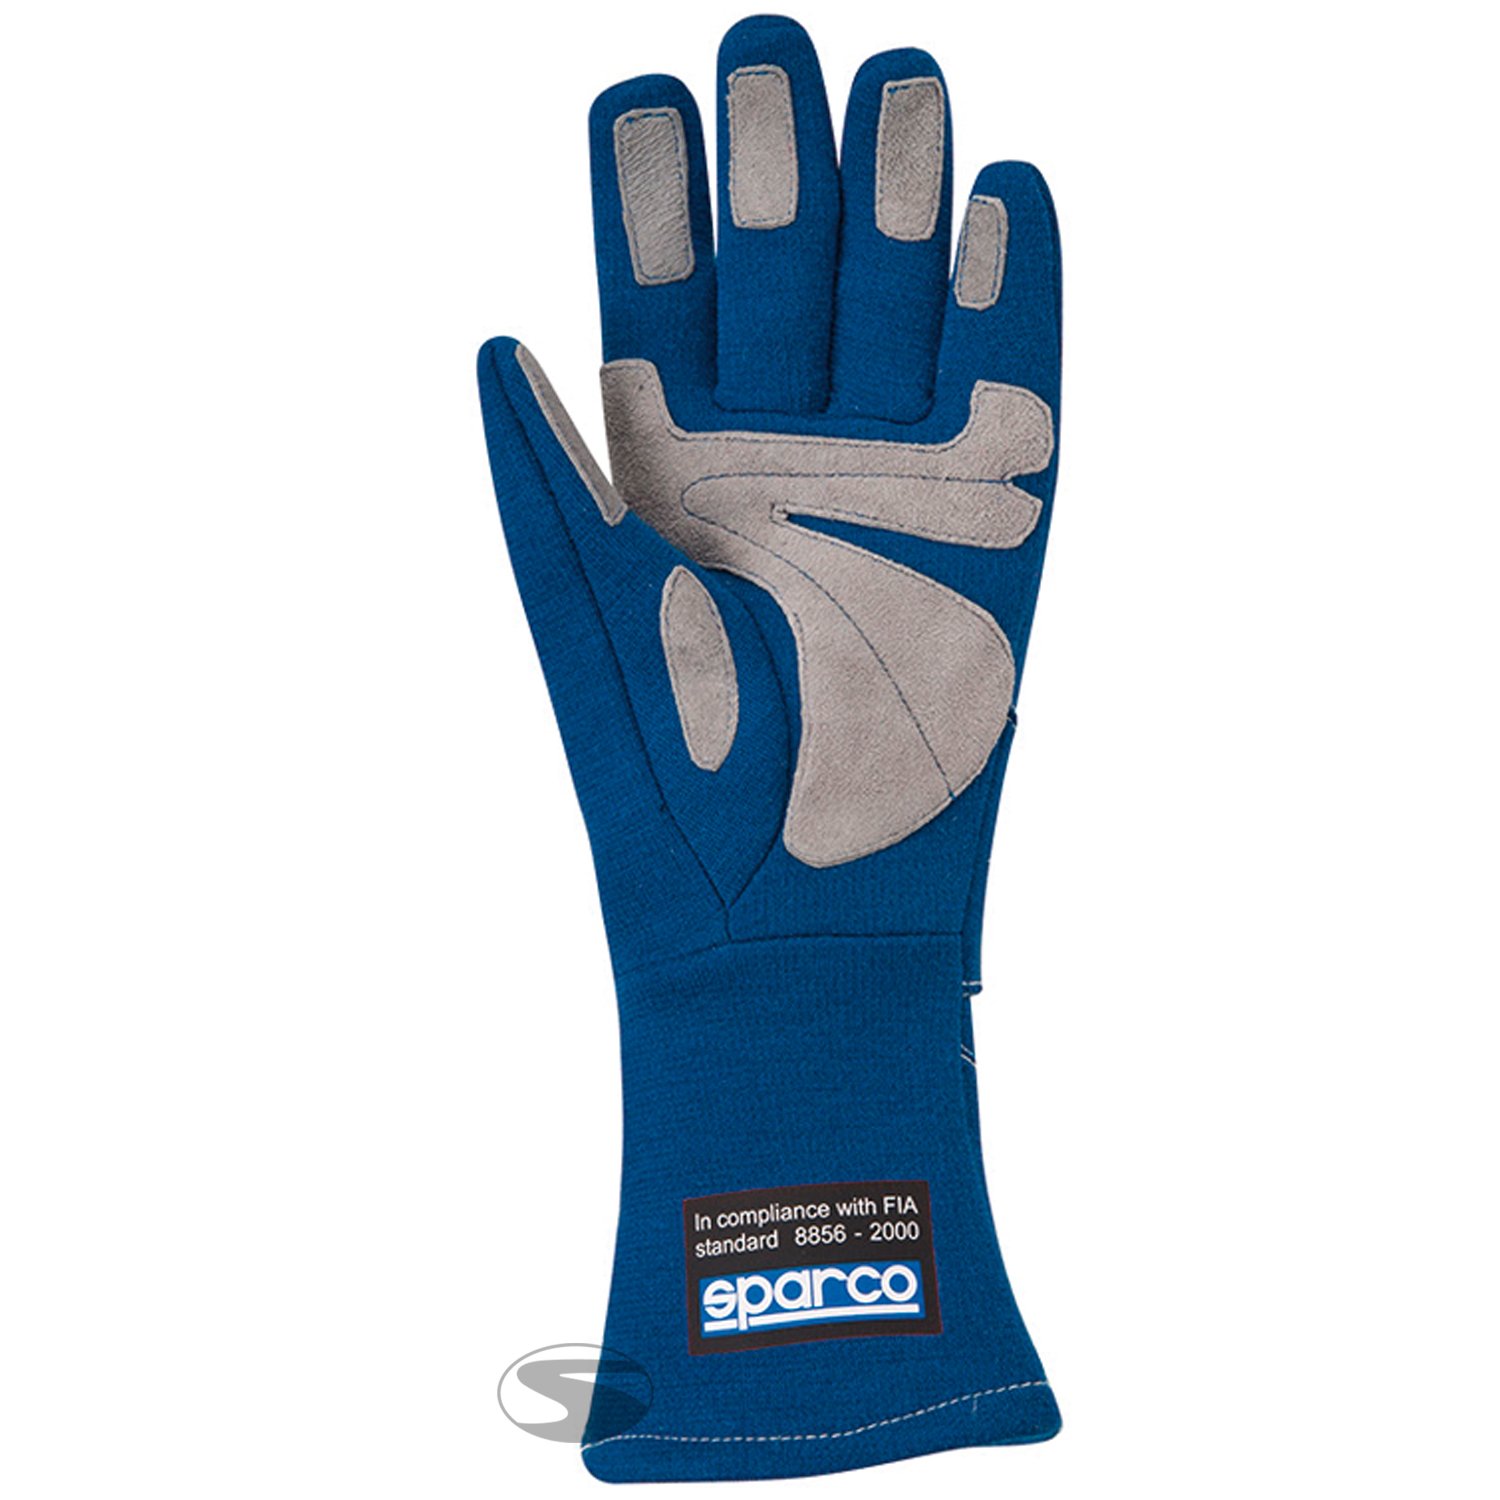 Sparco Handschuh Flash L3, blau